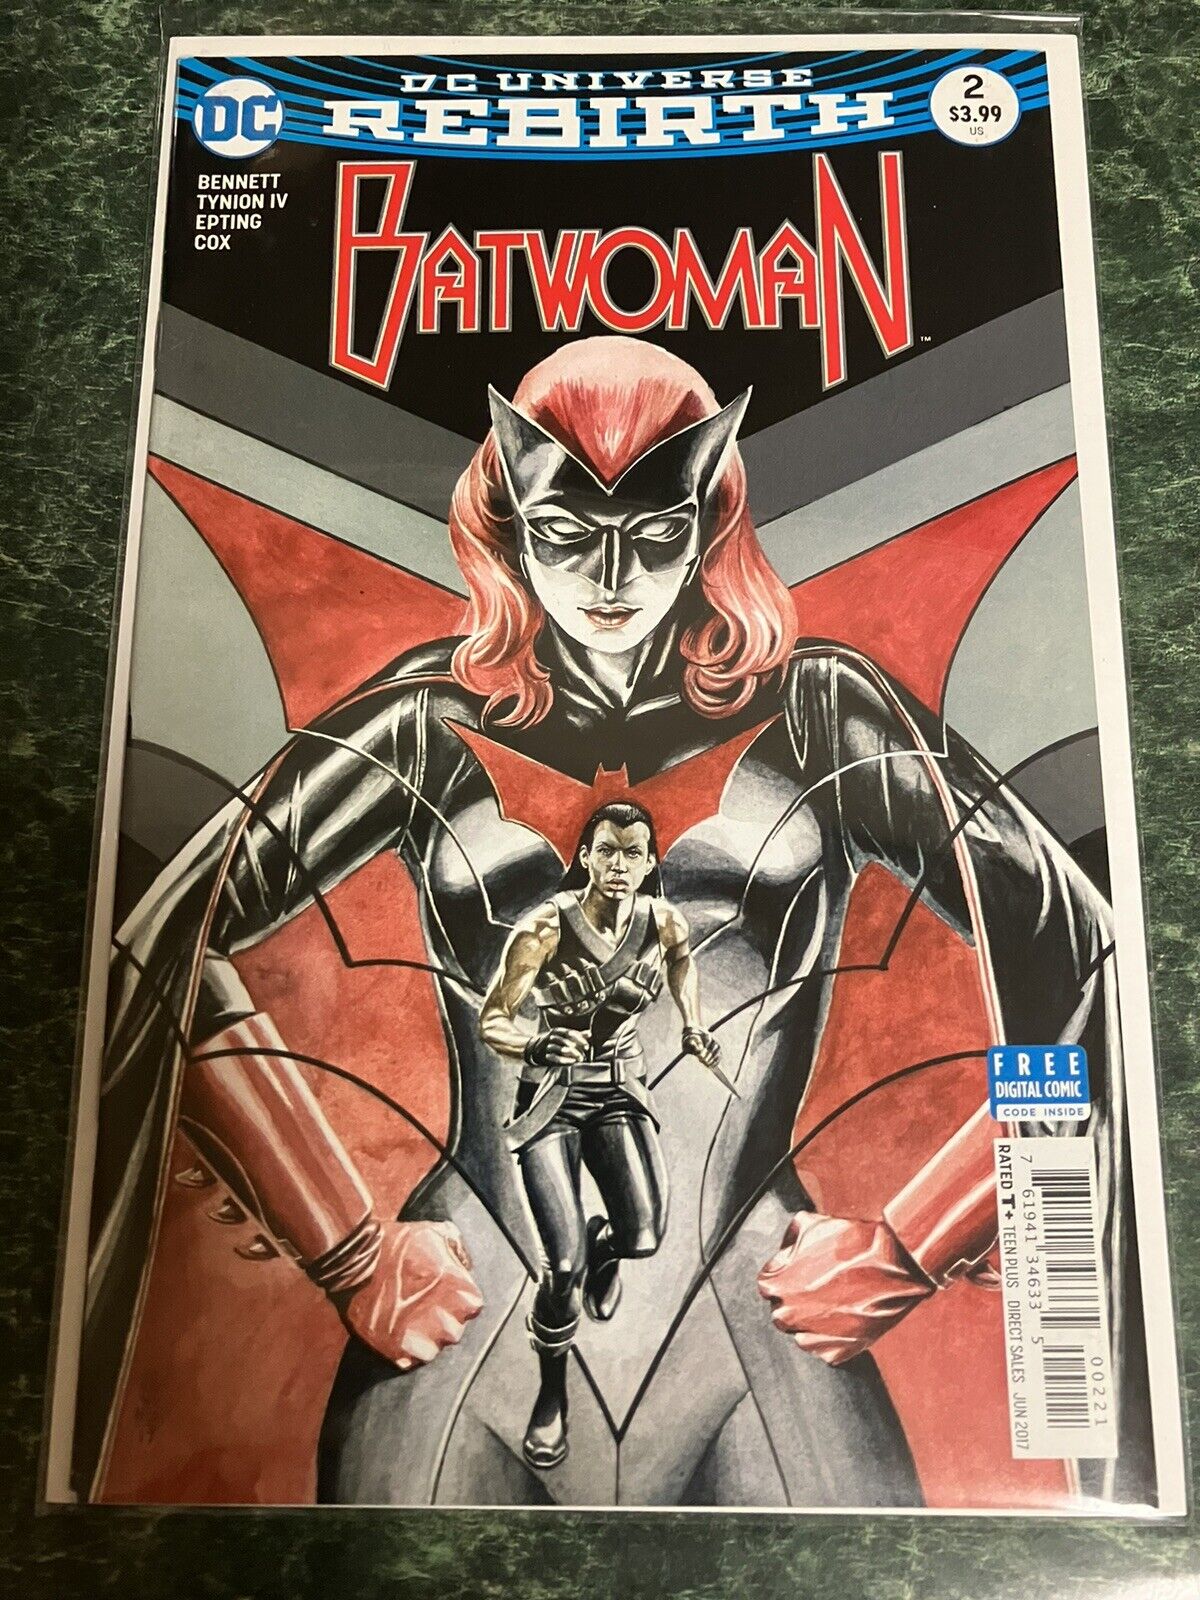 BATWOMAN #2  (2017) DC Comics - Rebirth VF-NM Jones Variant.